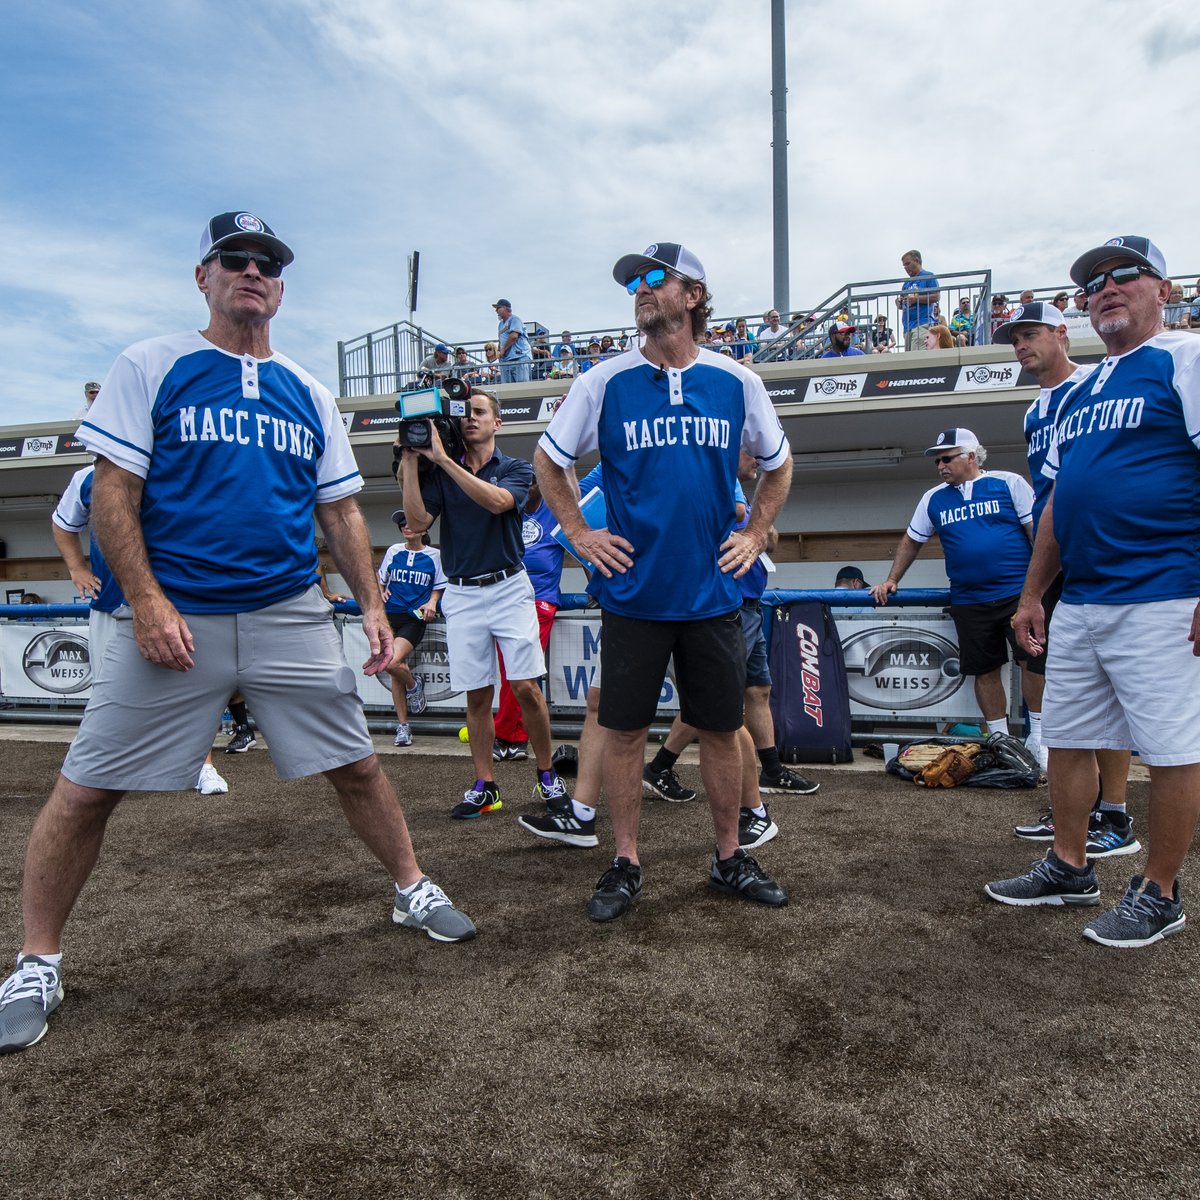 Charity softball game with Yount, Molitor, Gantner raises $102,000